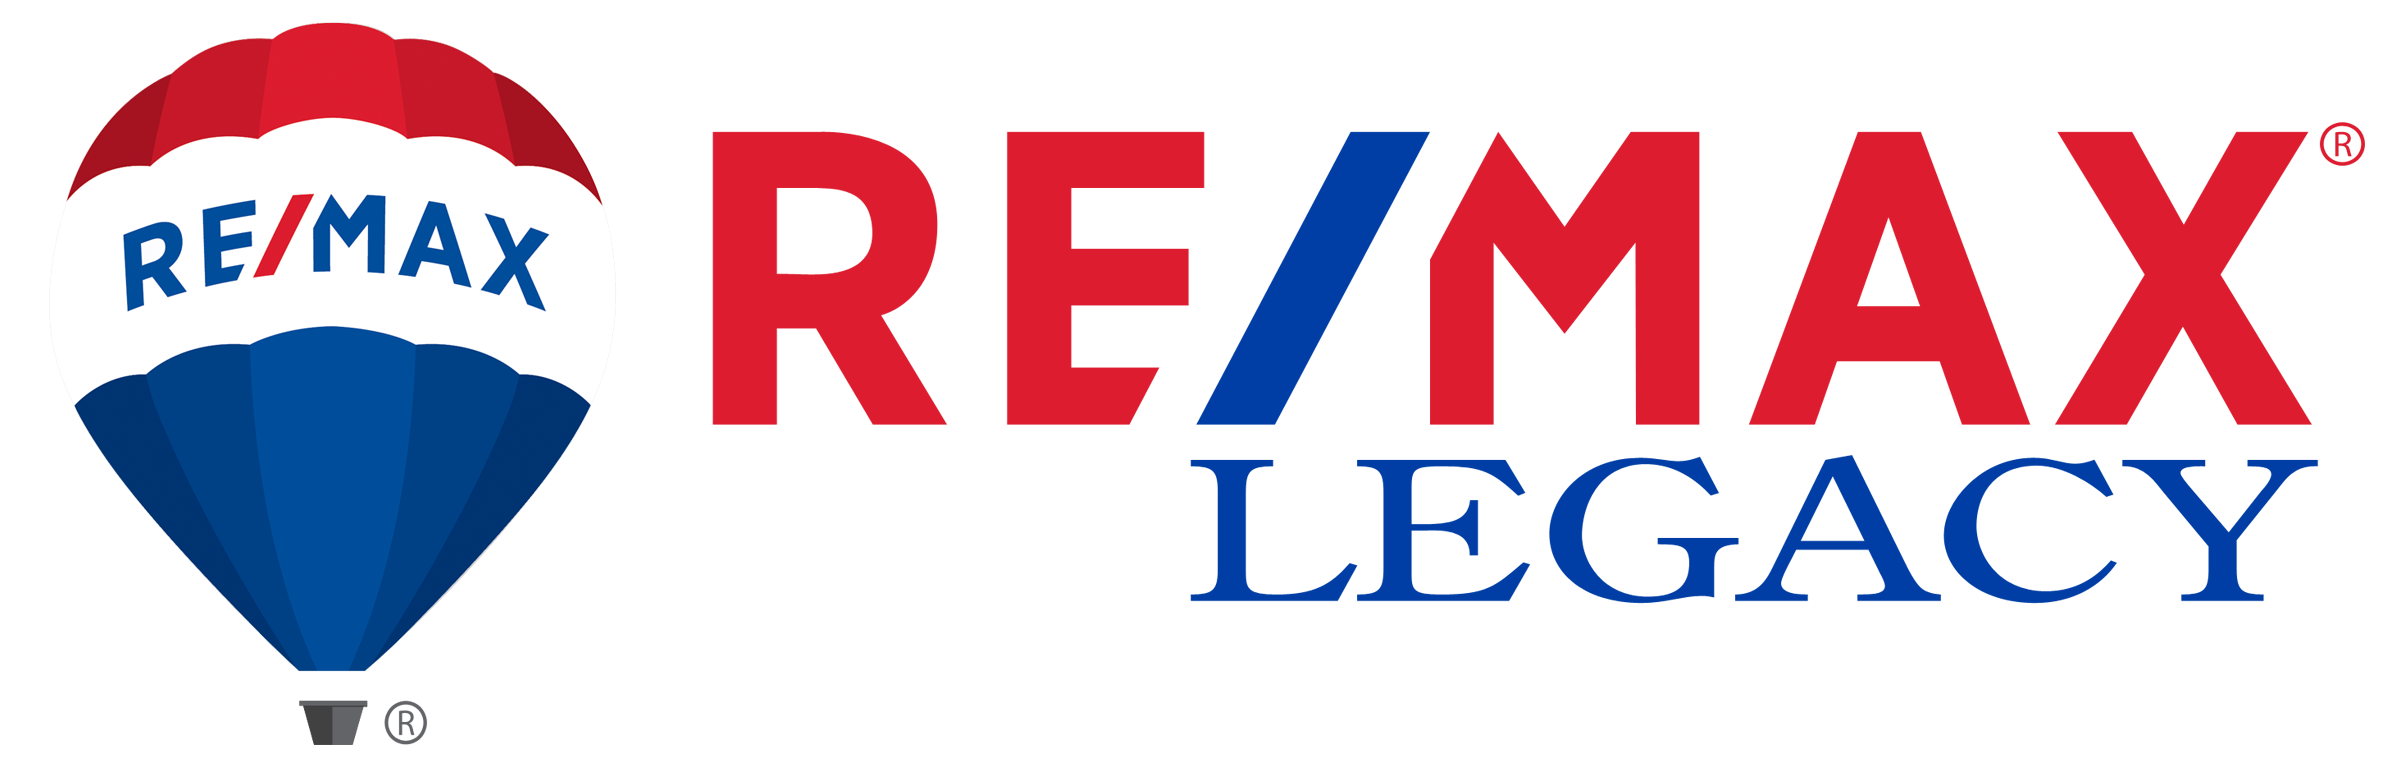 RE/MAX Legacy logo